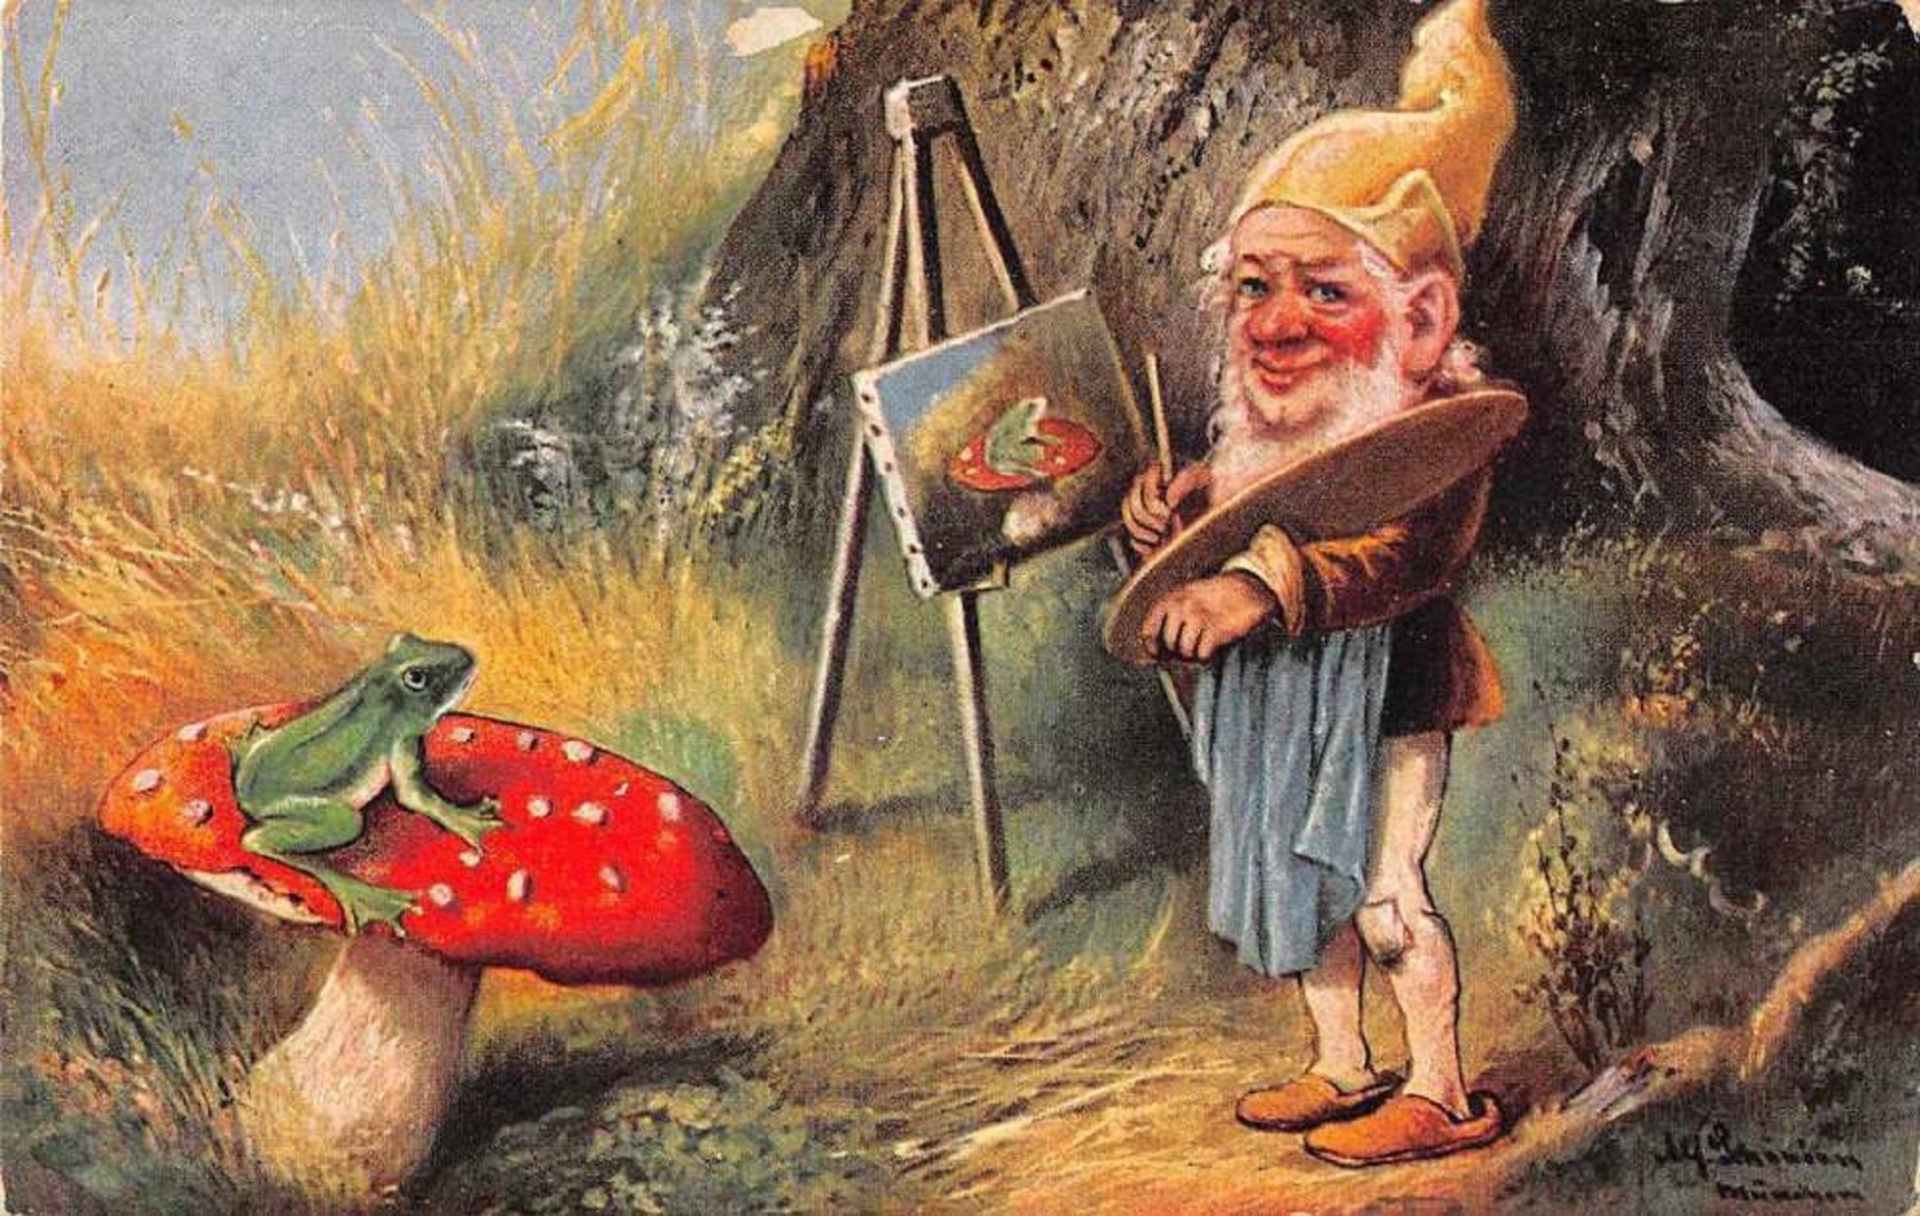 Gnome Elf Painting Frog on Mushroom Artist Unknown Ca 1912 Public Domain